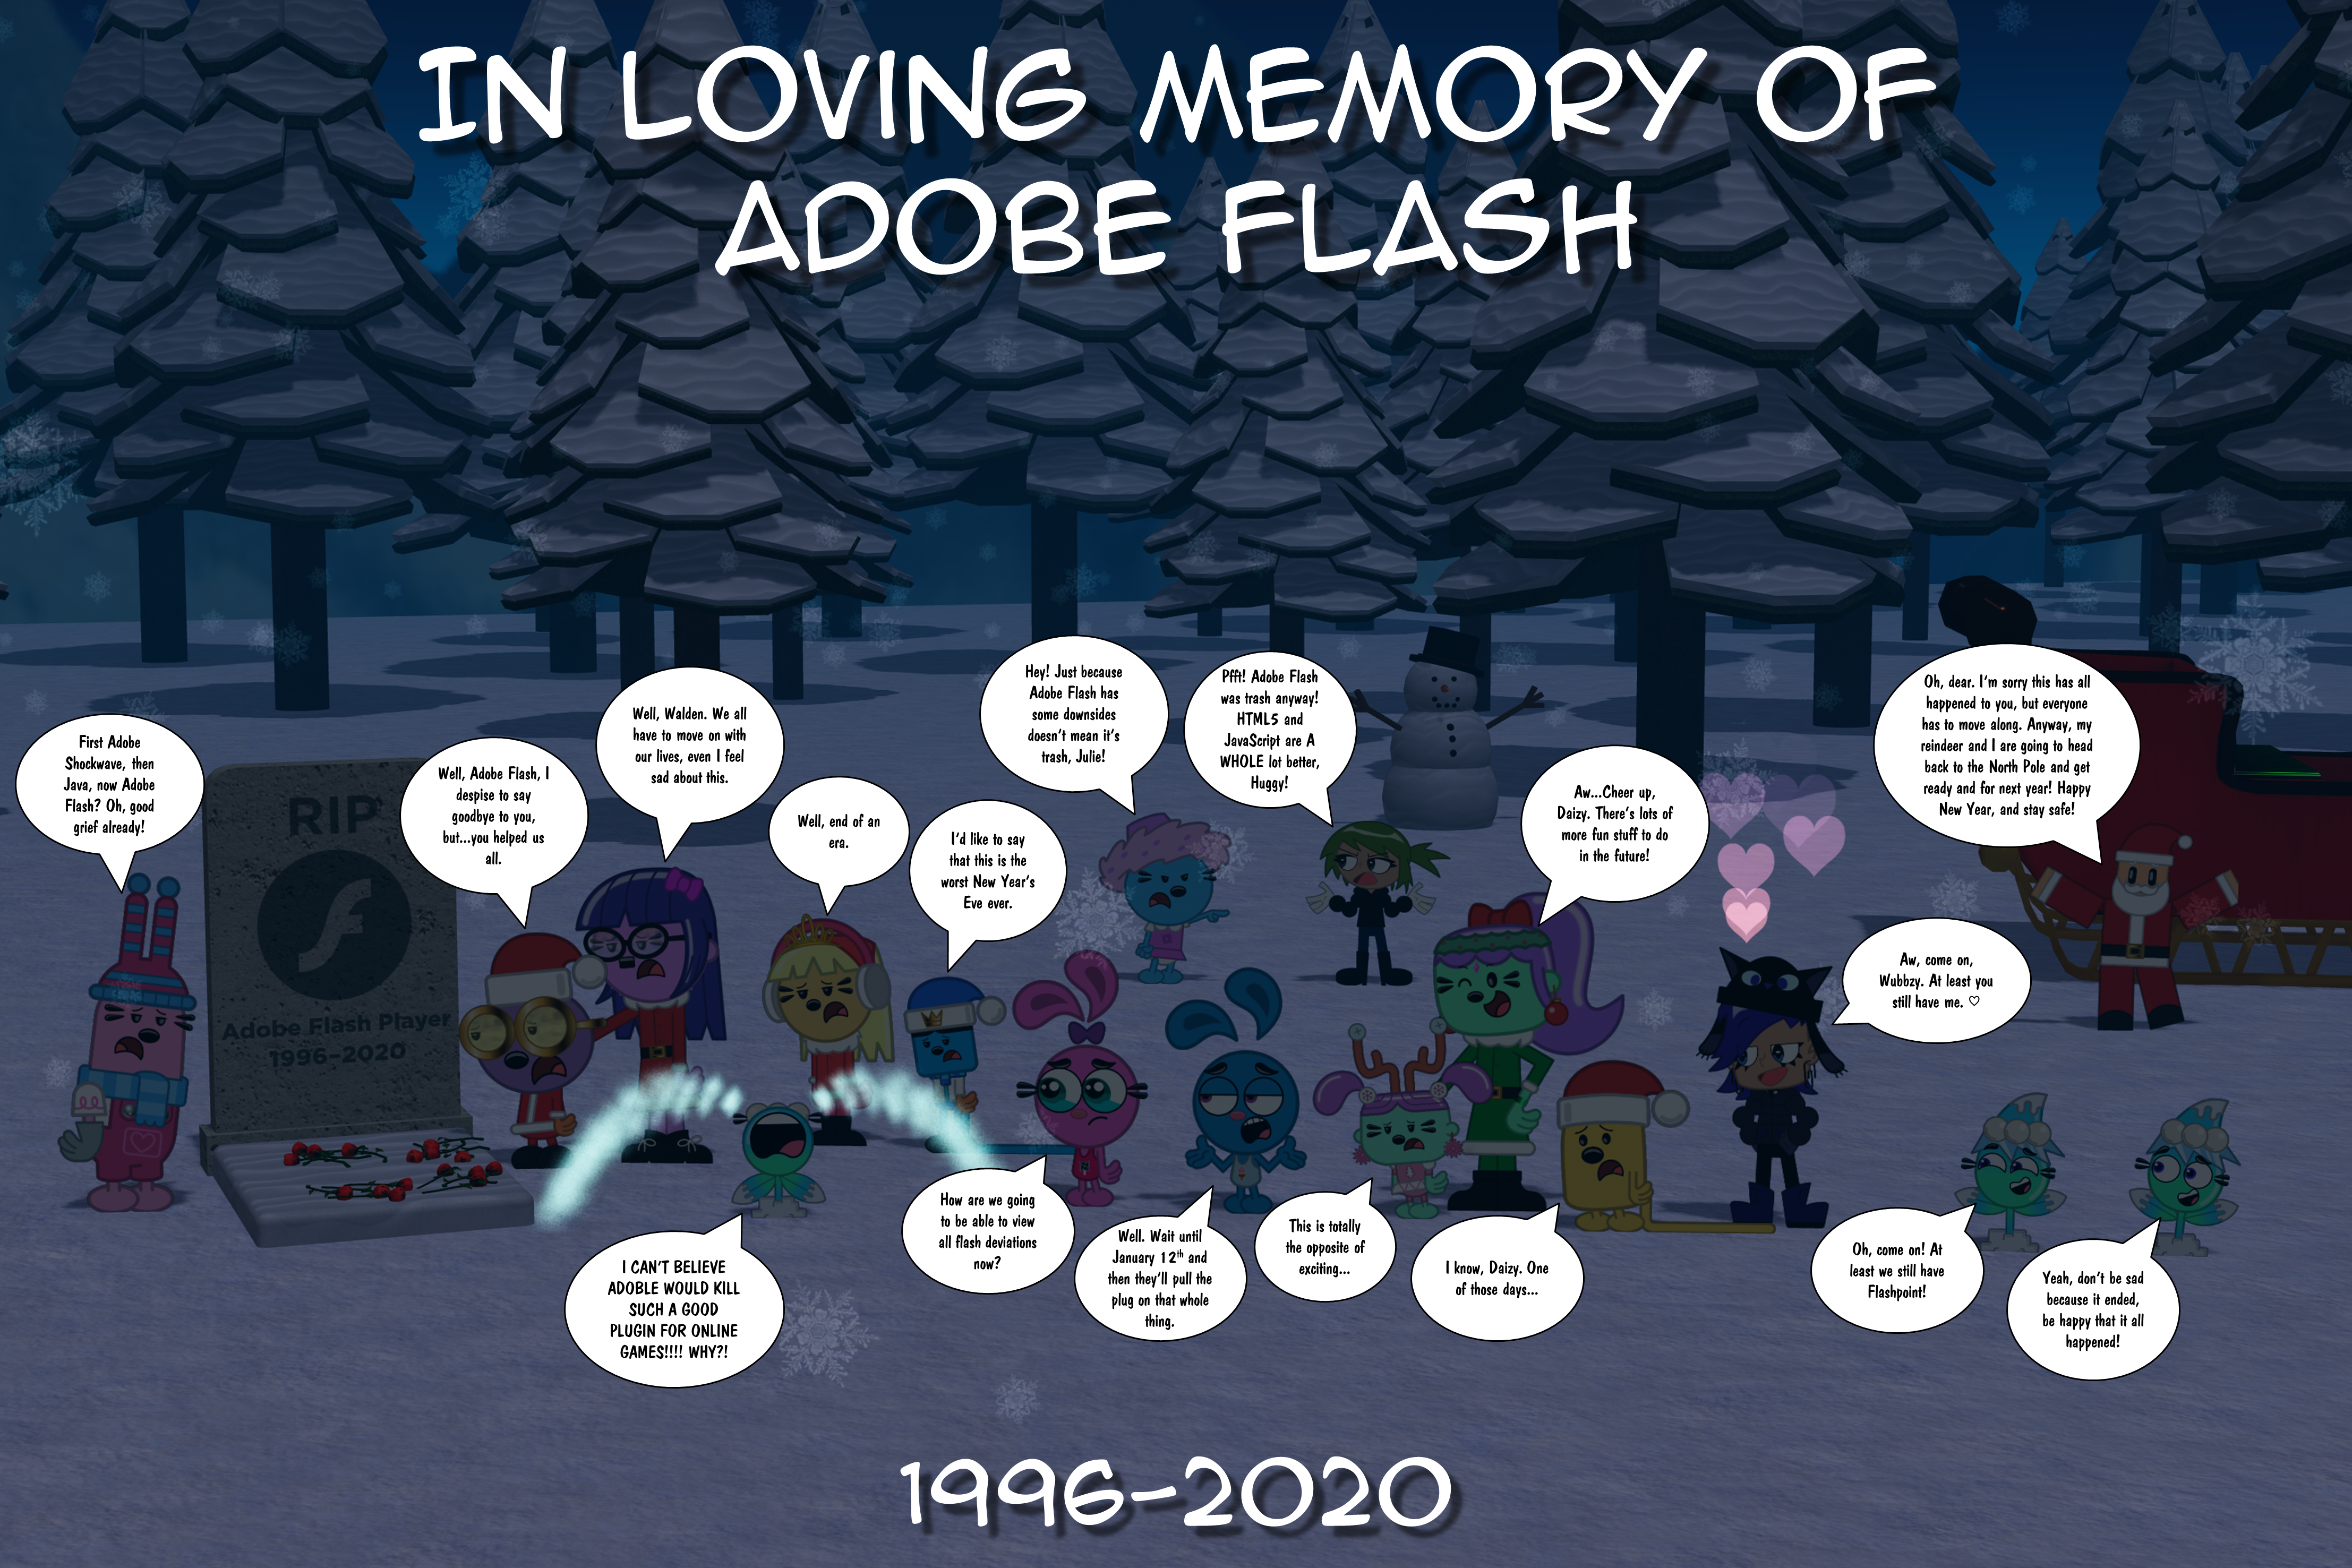 Good Bye my Friend 31/12/2020#flashplayer #adobeflashplayer